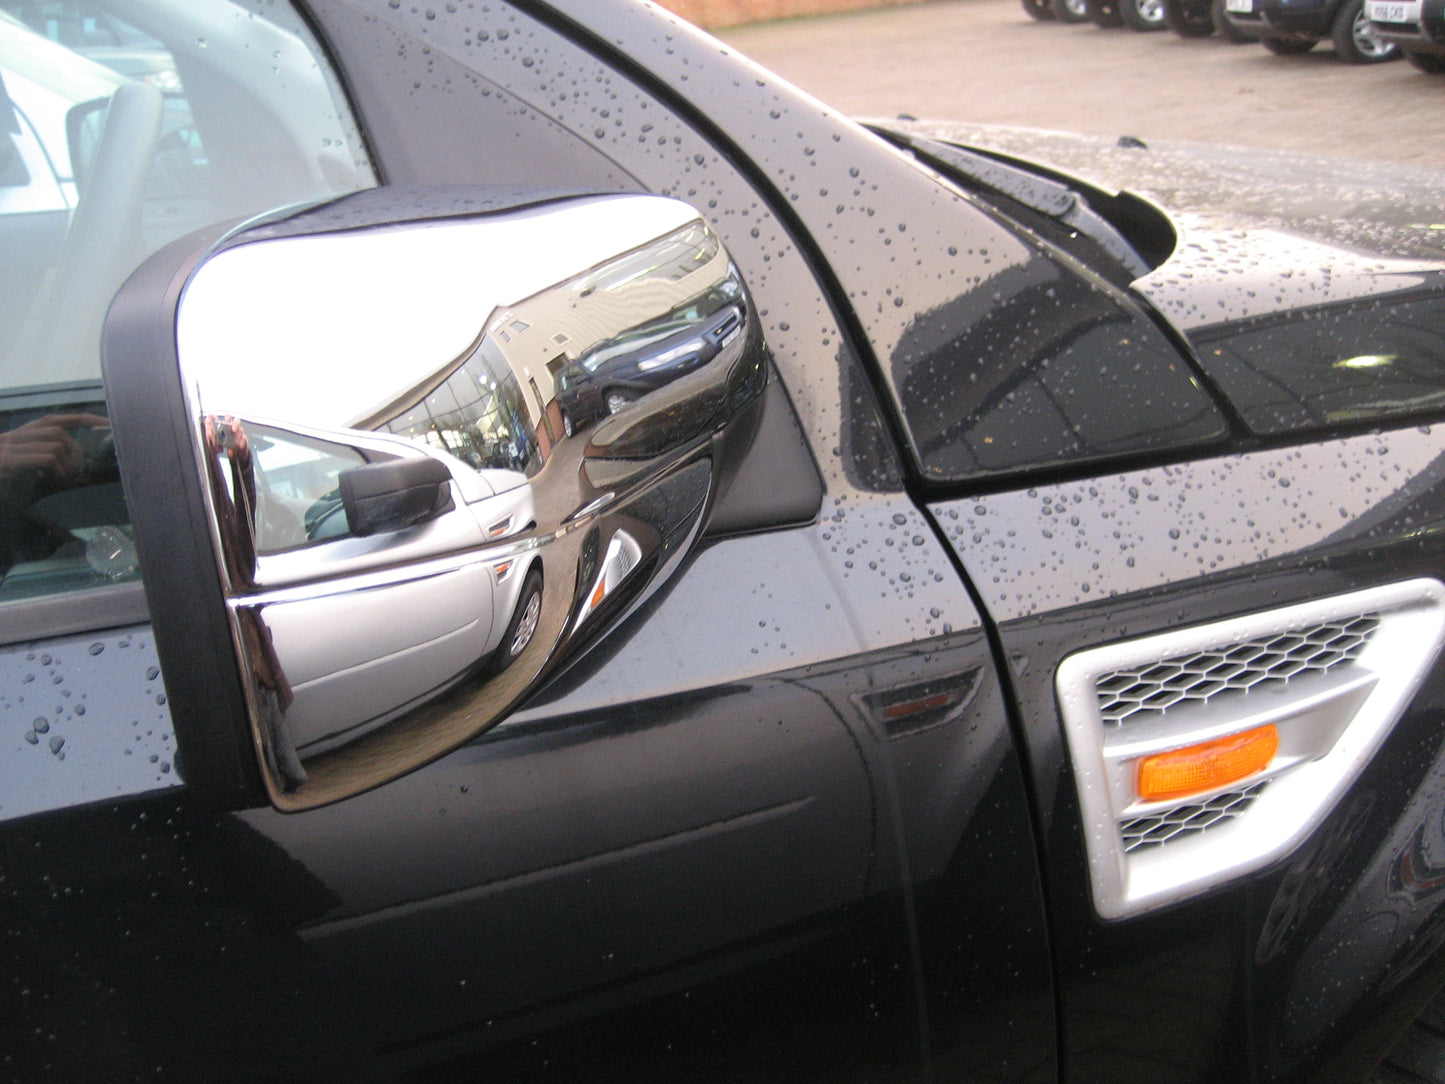 Full Mirror Covers for Land Rover Freelander 2 (2007-2009 Mirrors) - Chrome